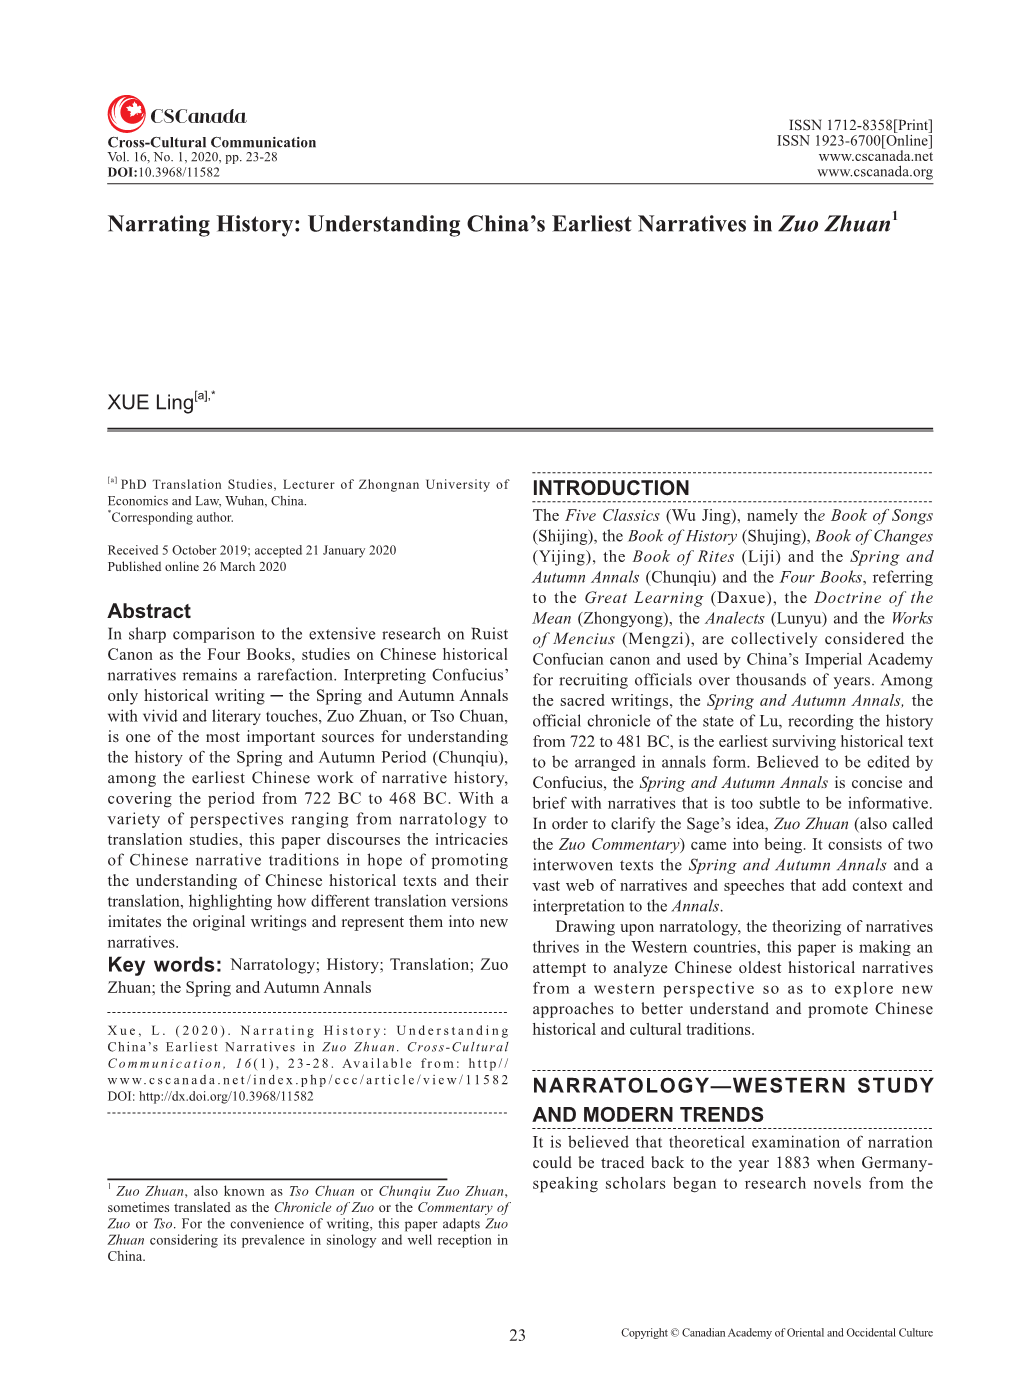 Understanding China's Earliest Narratives in Zuo